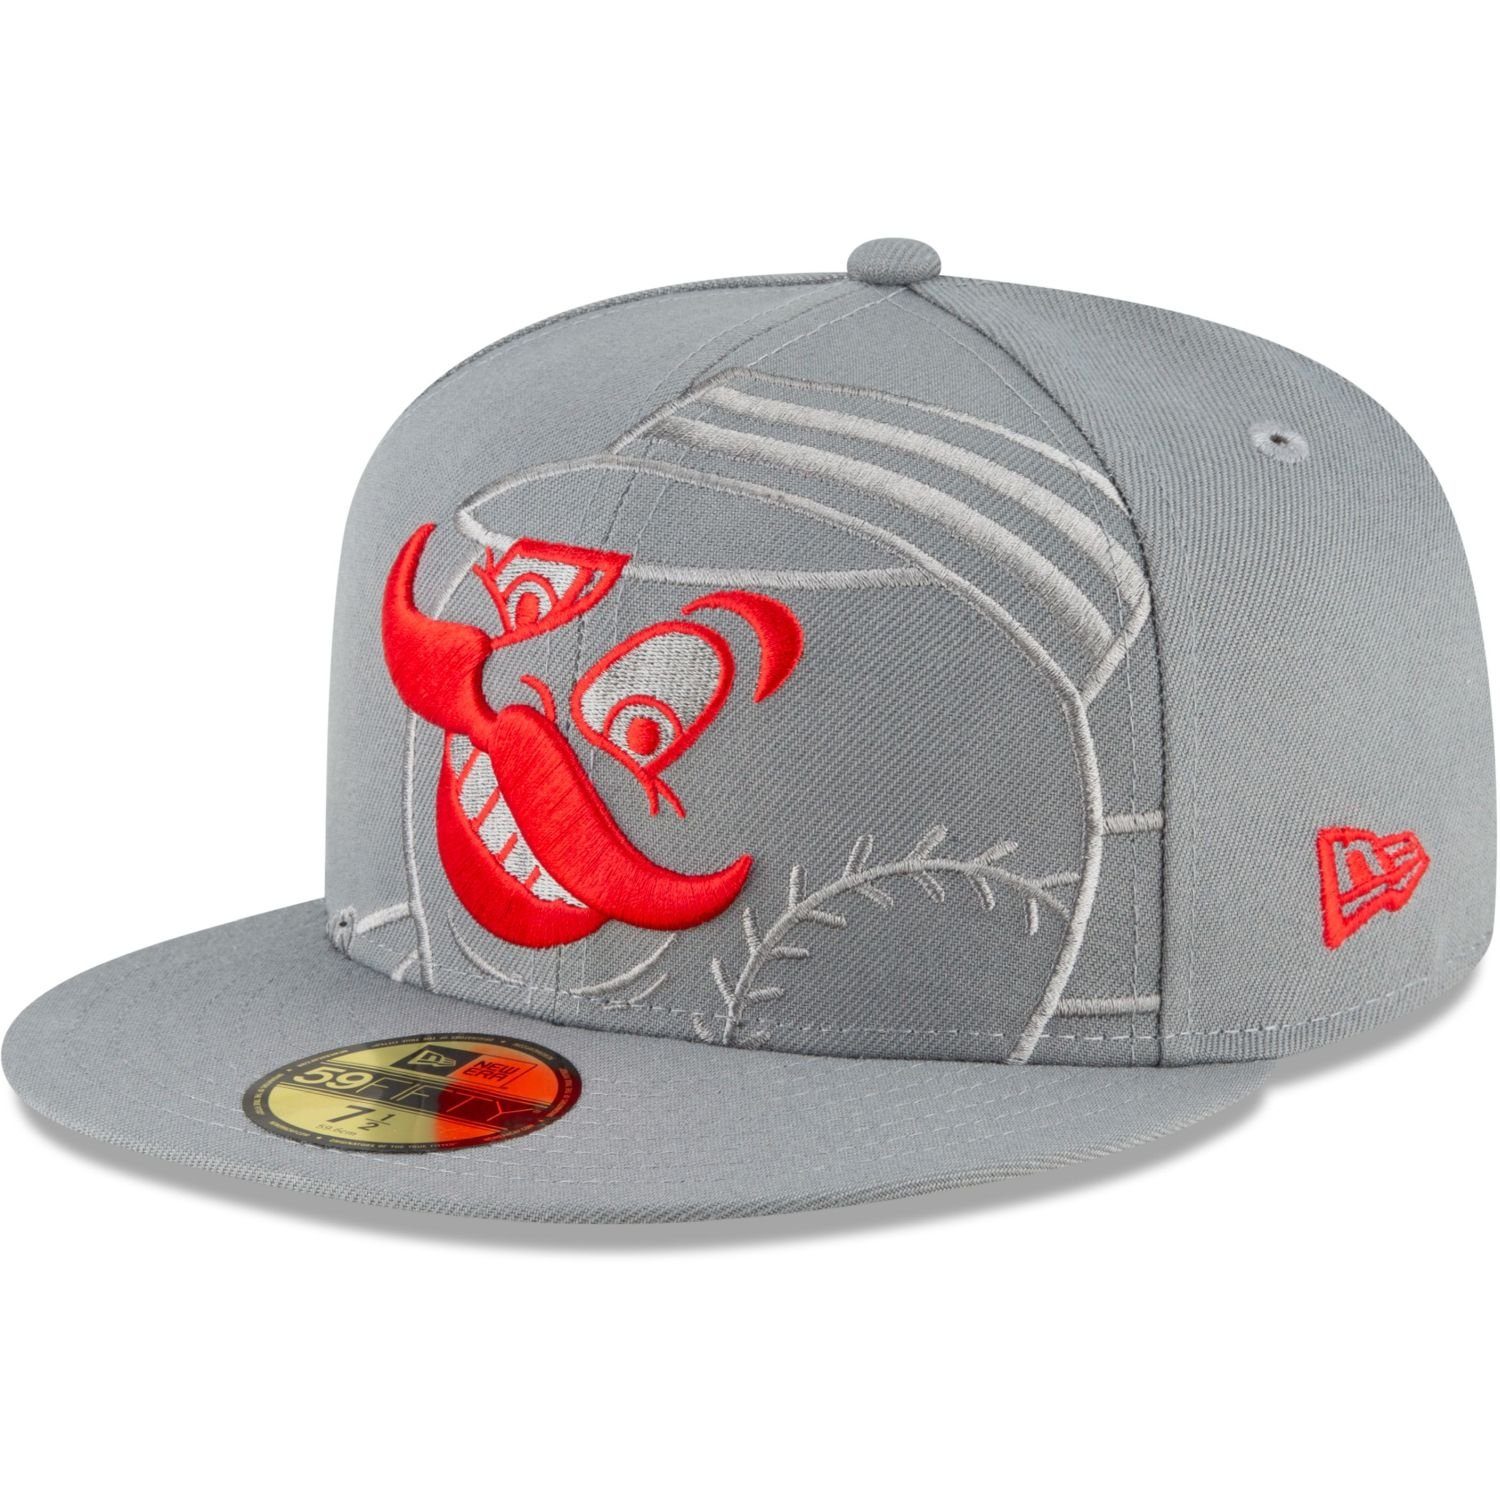 New Era Fitted Cap 59Fifty STORM GREY MLB Cooperstown Team Cincinnati Reds